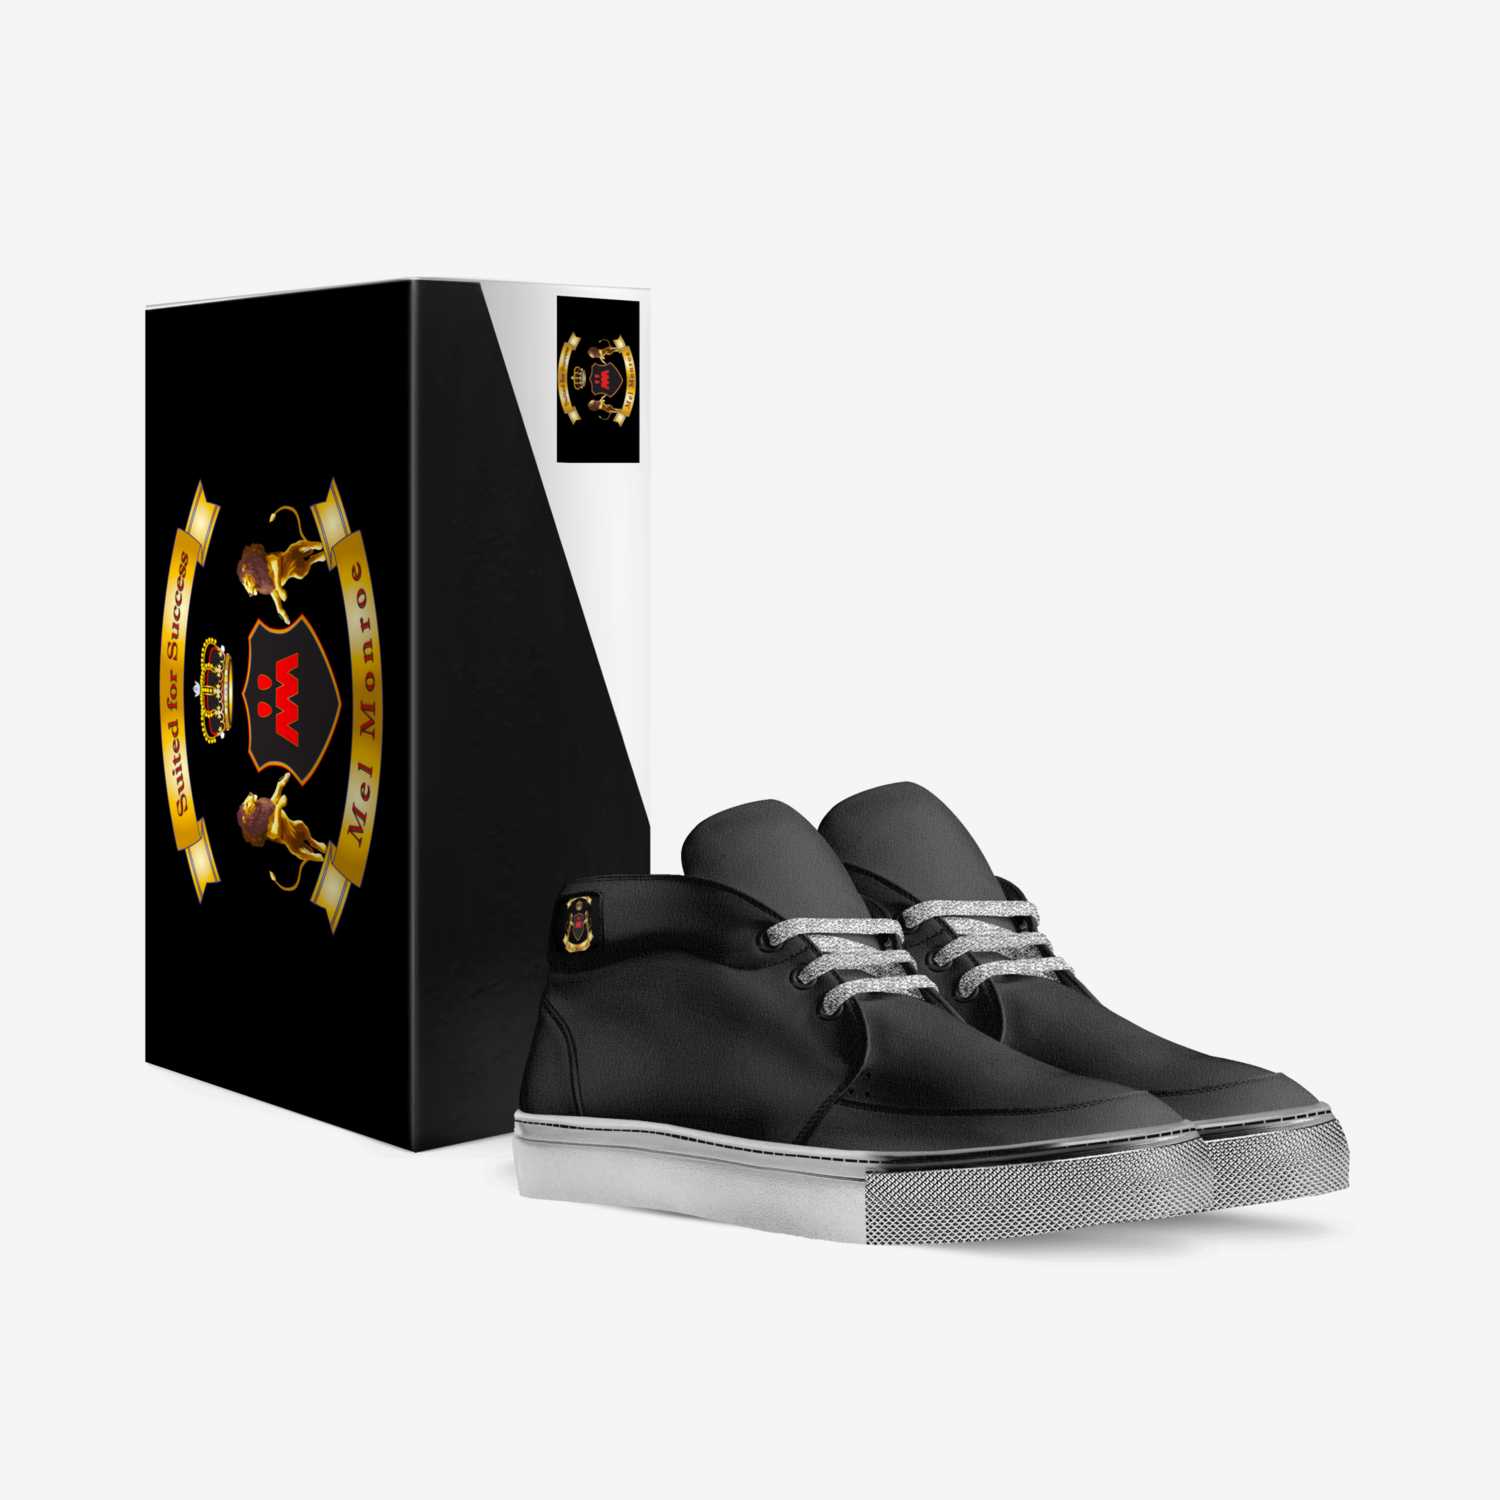 Mel Monroe custom made in Italy shoes by Mel Monroe | Box view